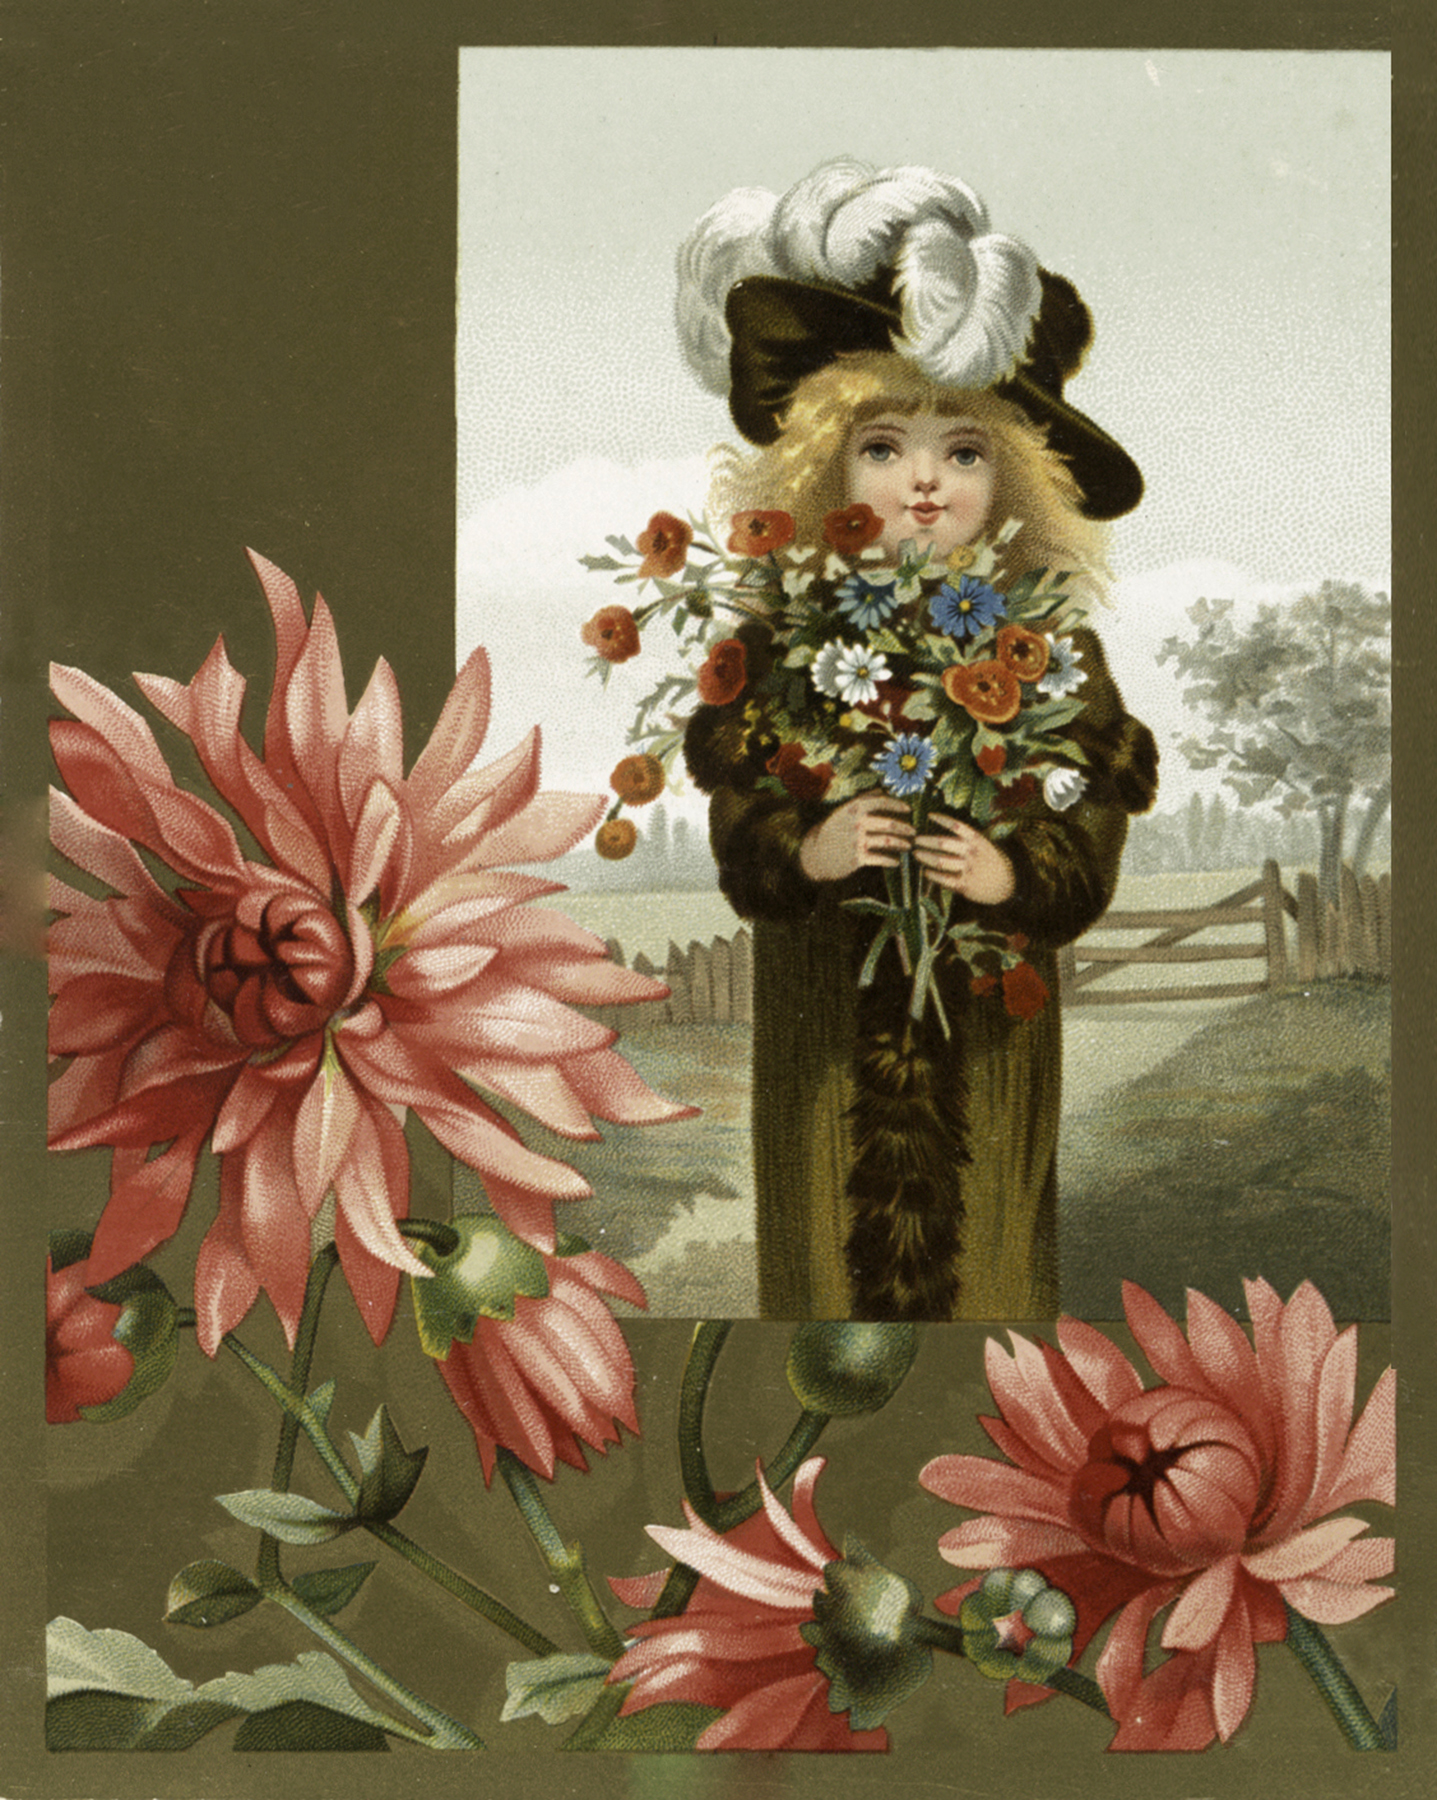 Vintage Girl Holding Flowers Image - Chrysanths - HD Wallpaper 